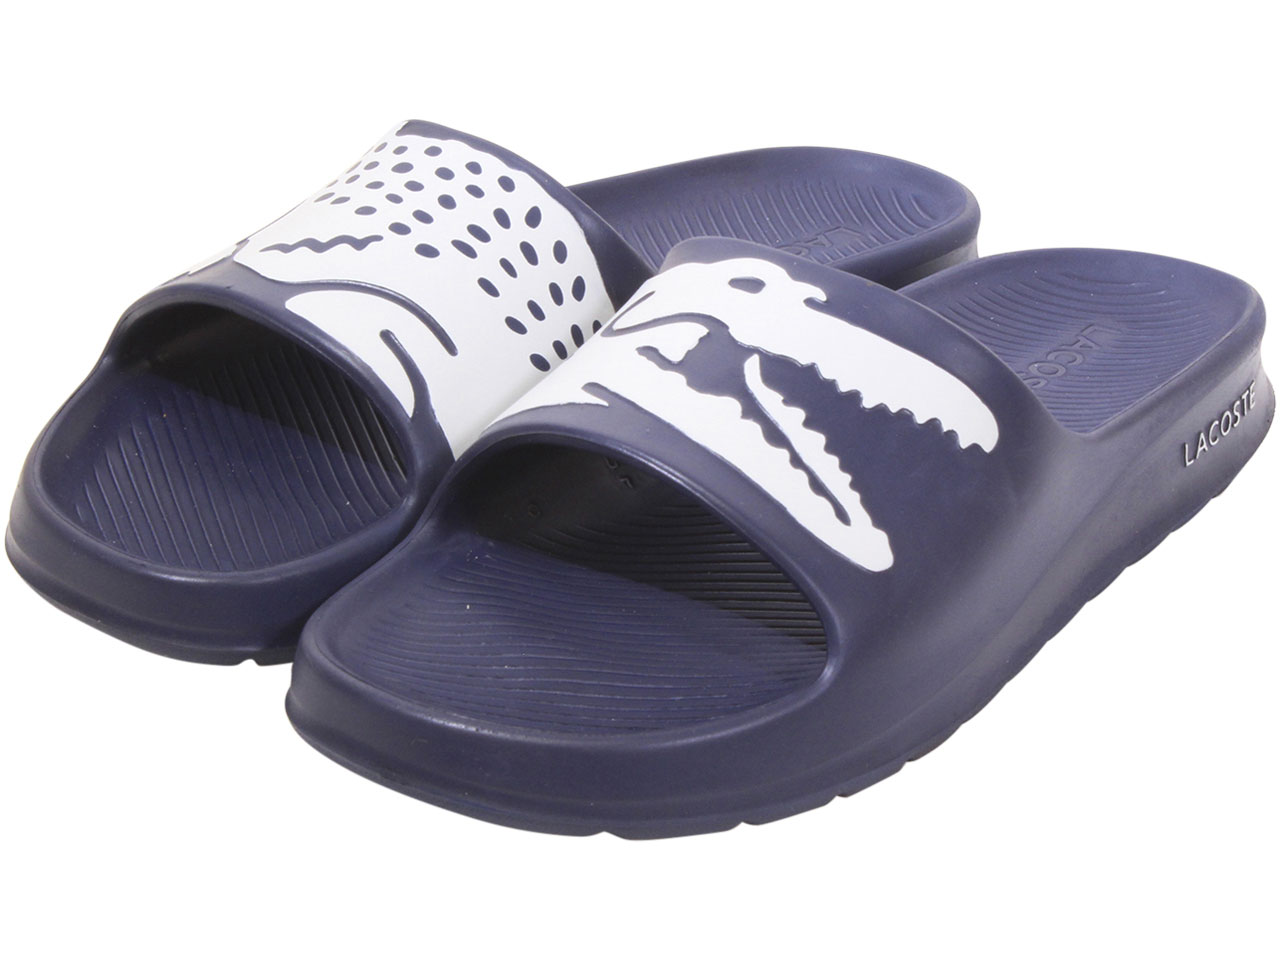 Lacoste Men's Croco-2.0 Slides Sandals Navy/White Sz: 11 7-41CMA0010092 |